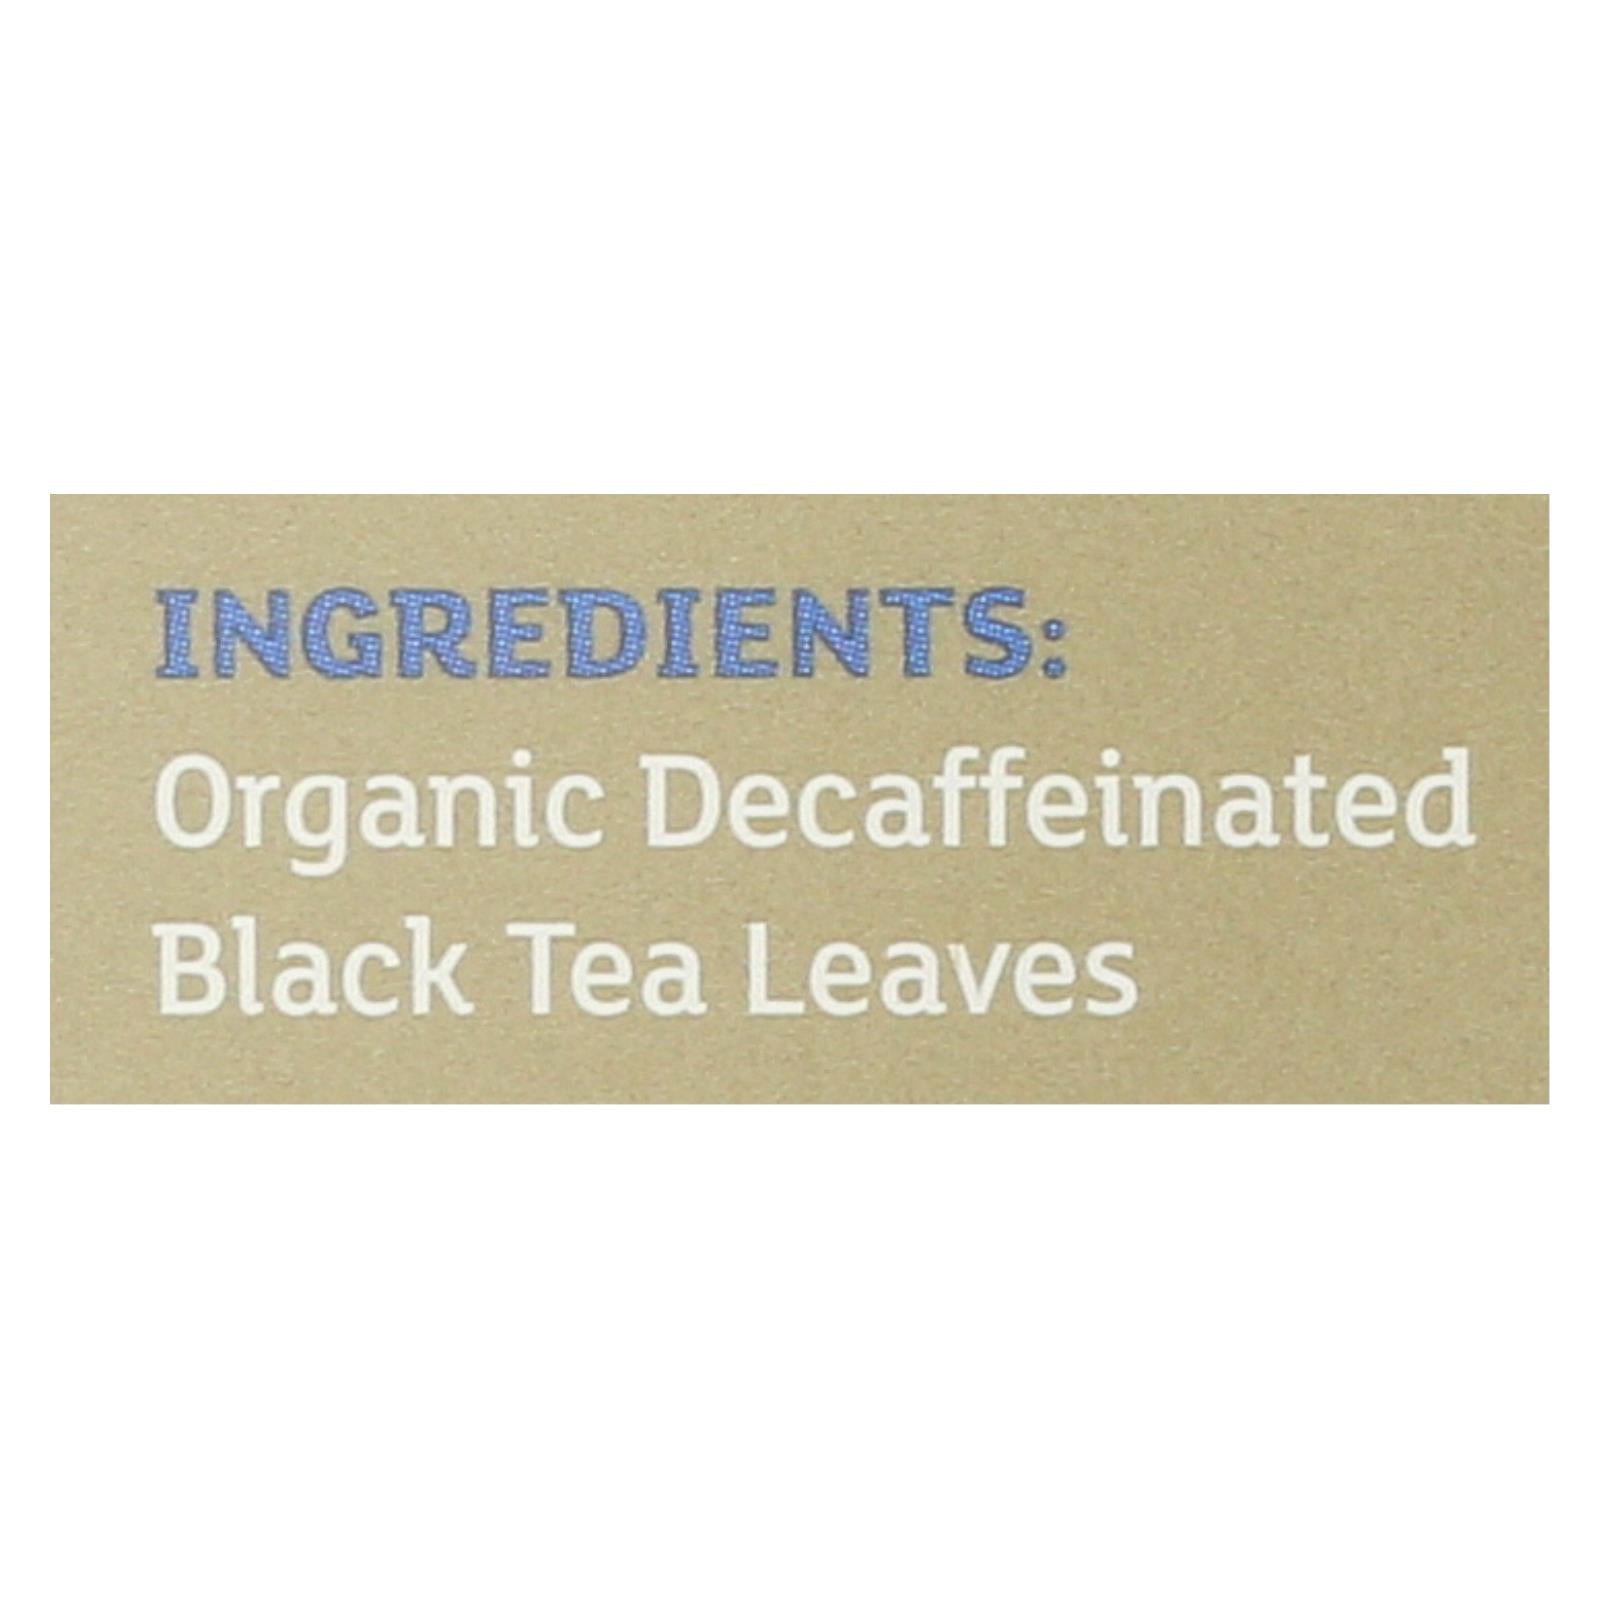 Equal Exchange Organic Decaf Black Tea - English Breakfast - Case Of 6 - 20 Bags